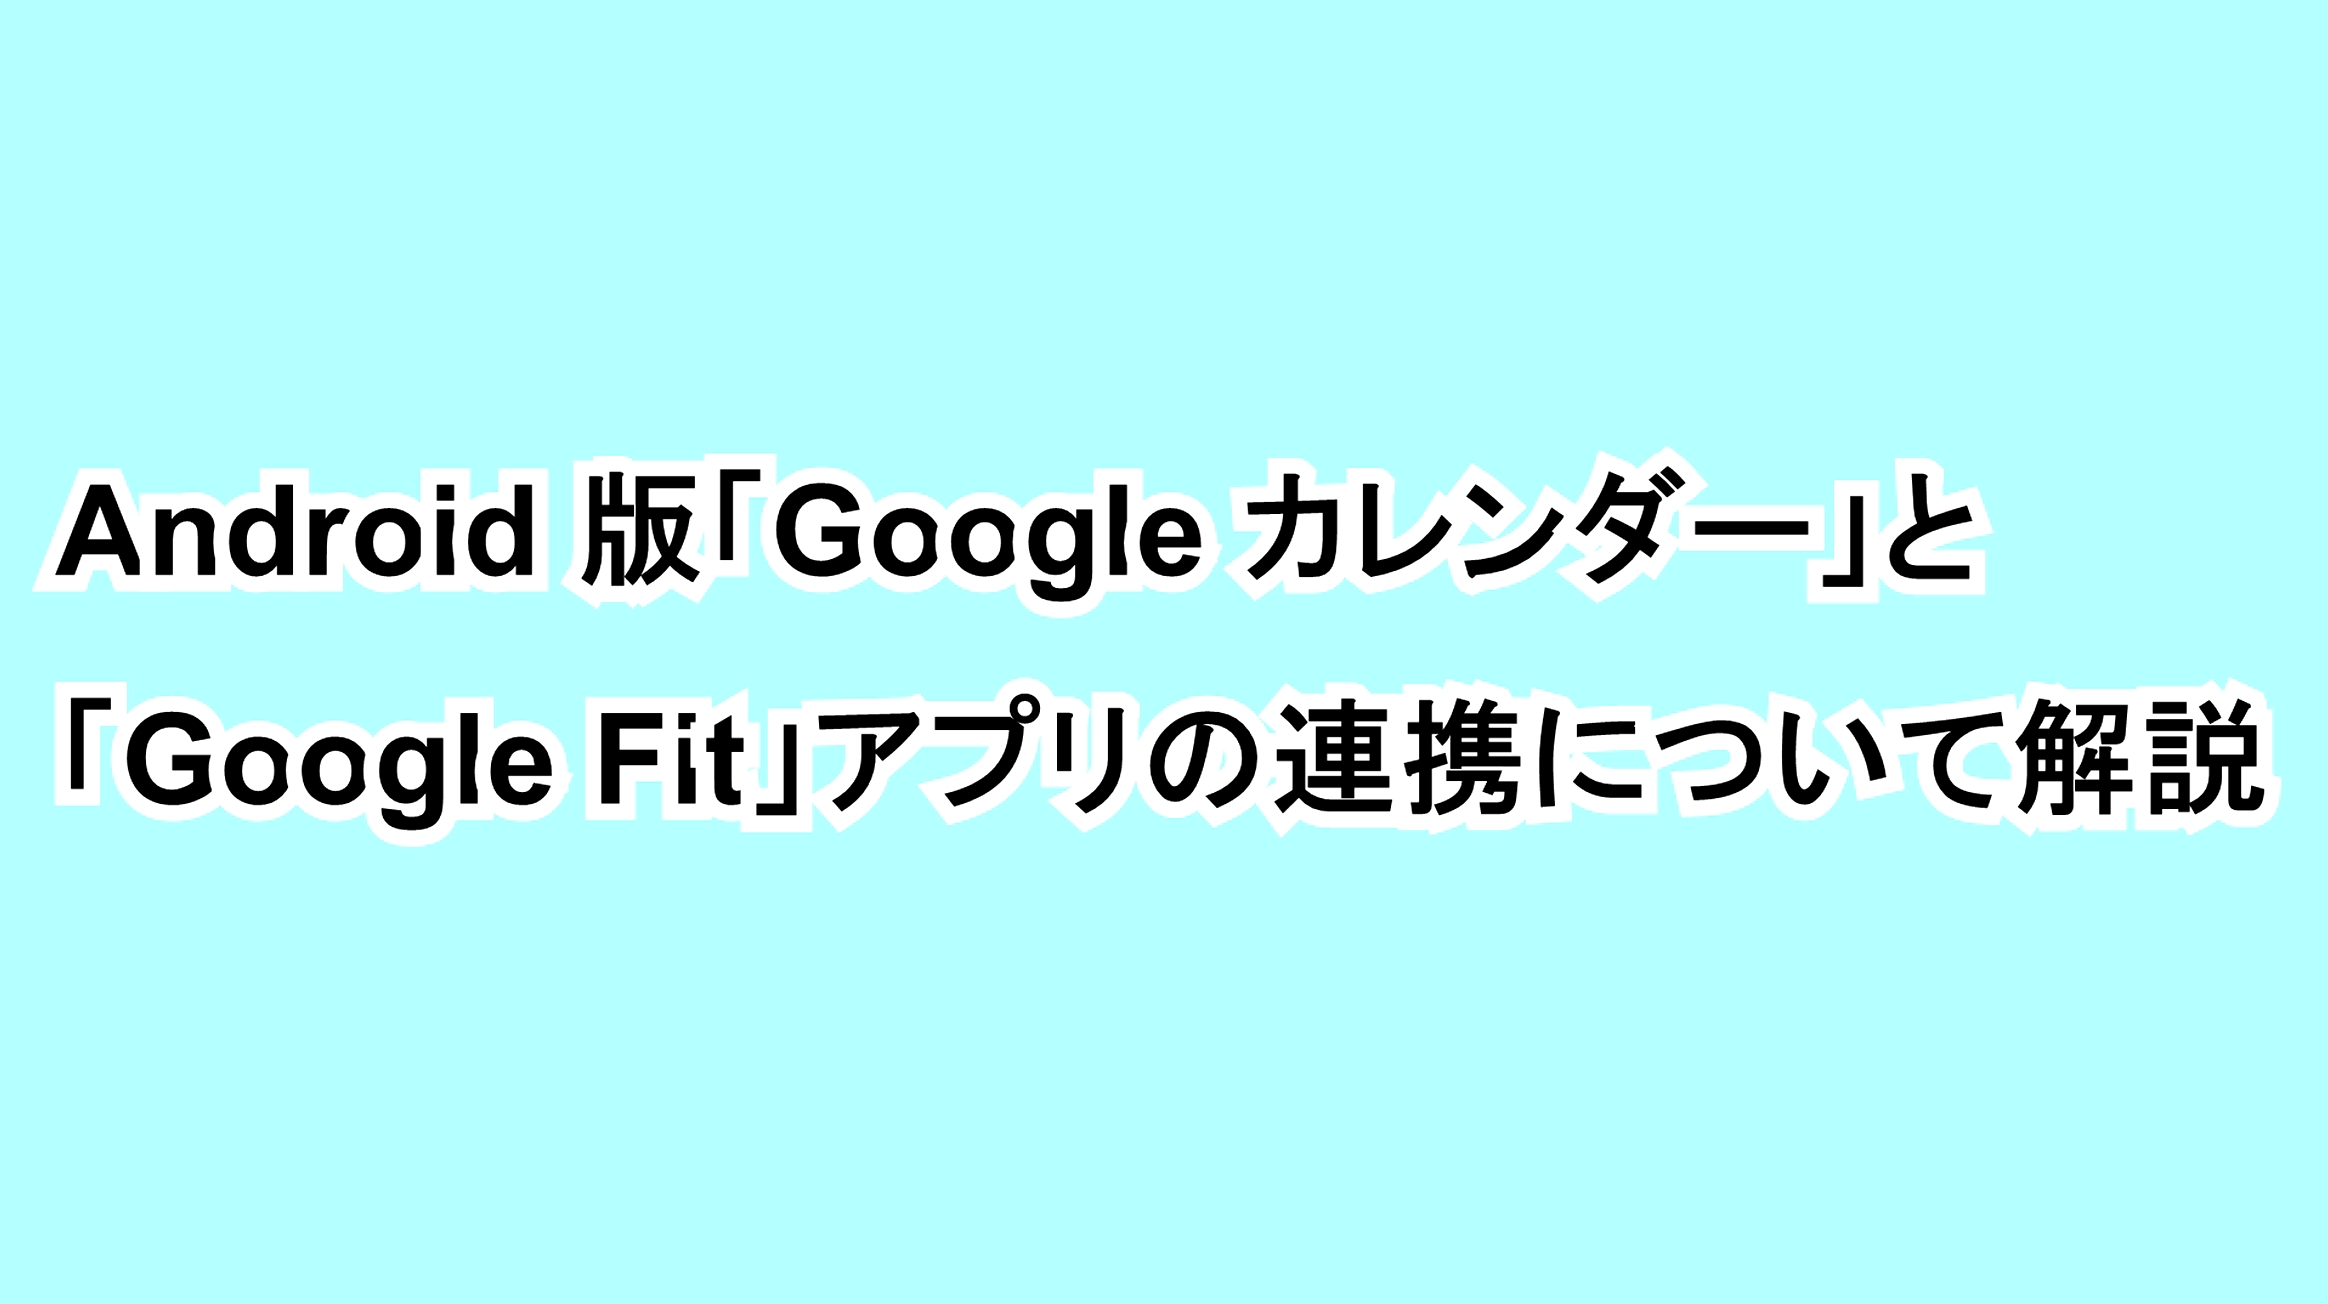 Android版「Google カレンダー」と「Google Fit」アプリの連携について解説